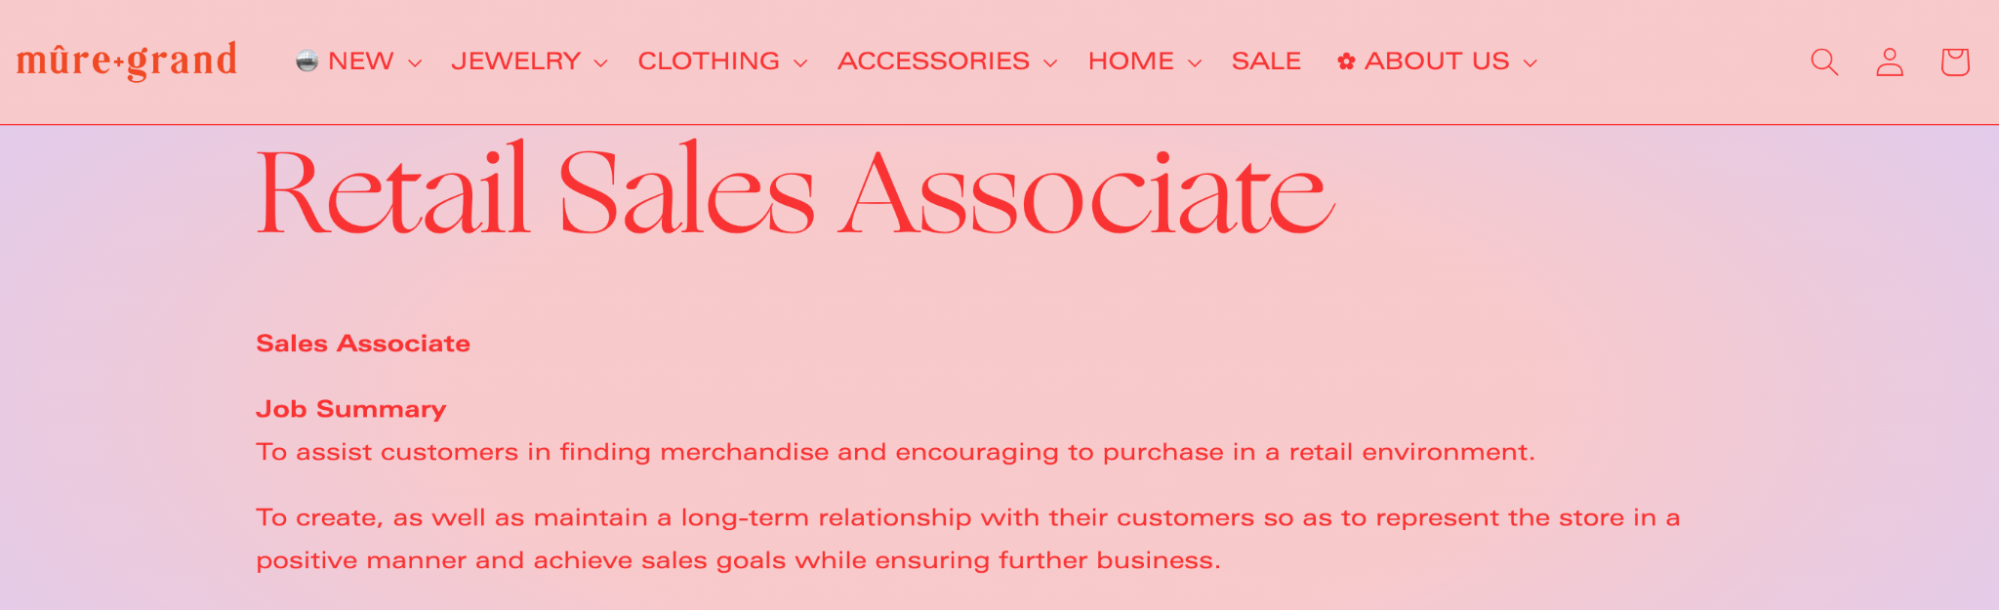 Screenshot of retail sales associate job opening for Mure + Grand